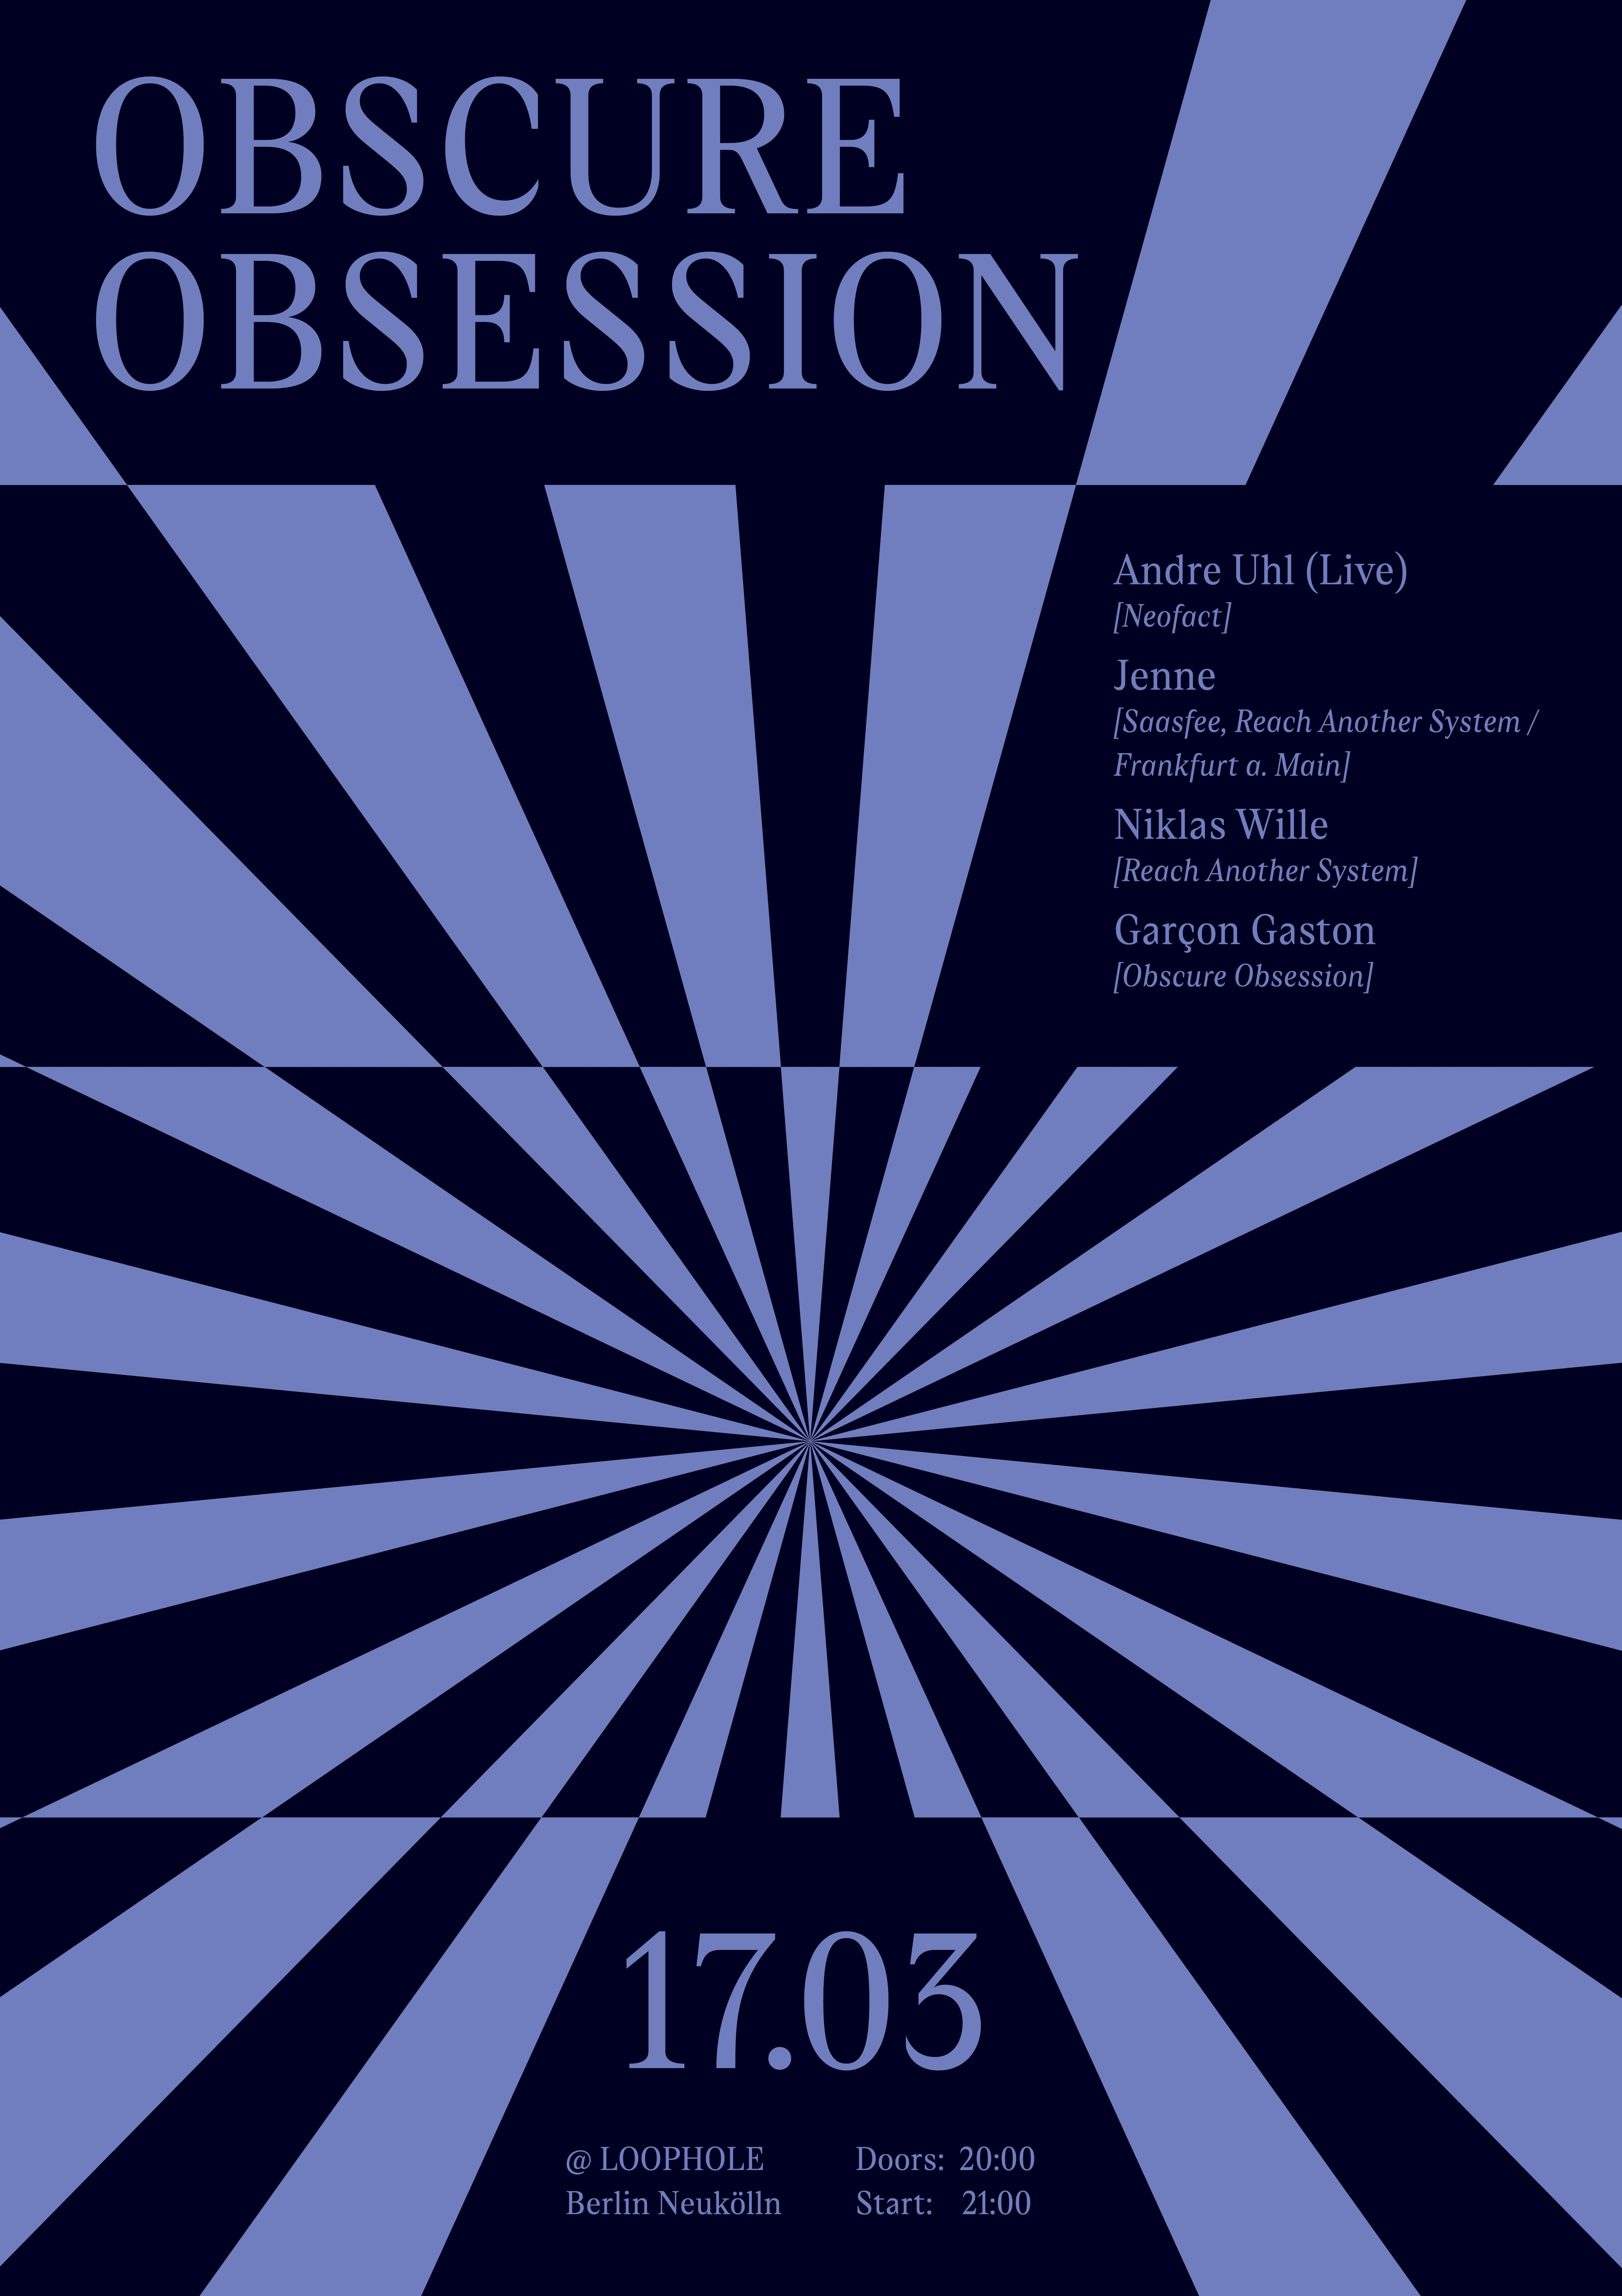 Obscure Obsession with Andre Uhl (Live), Jenne, Niklas Wille & Garçon Gaston - Página frontal